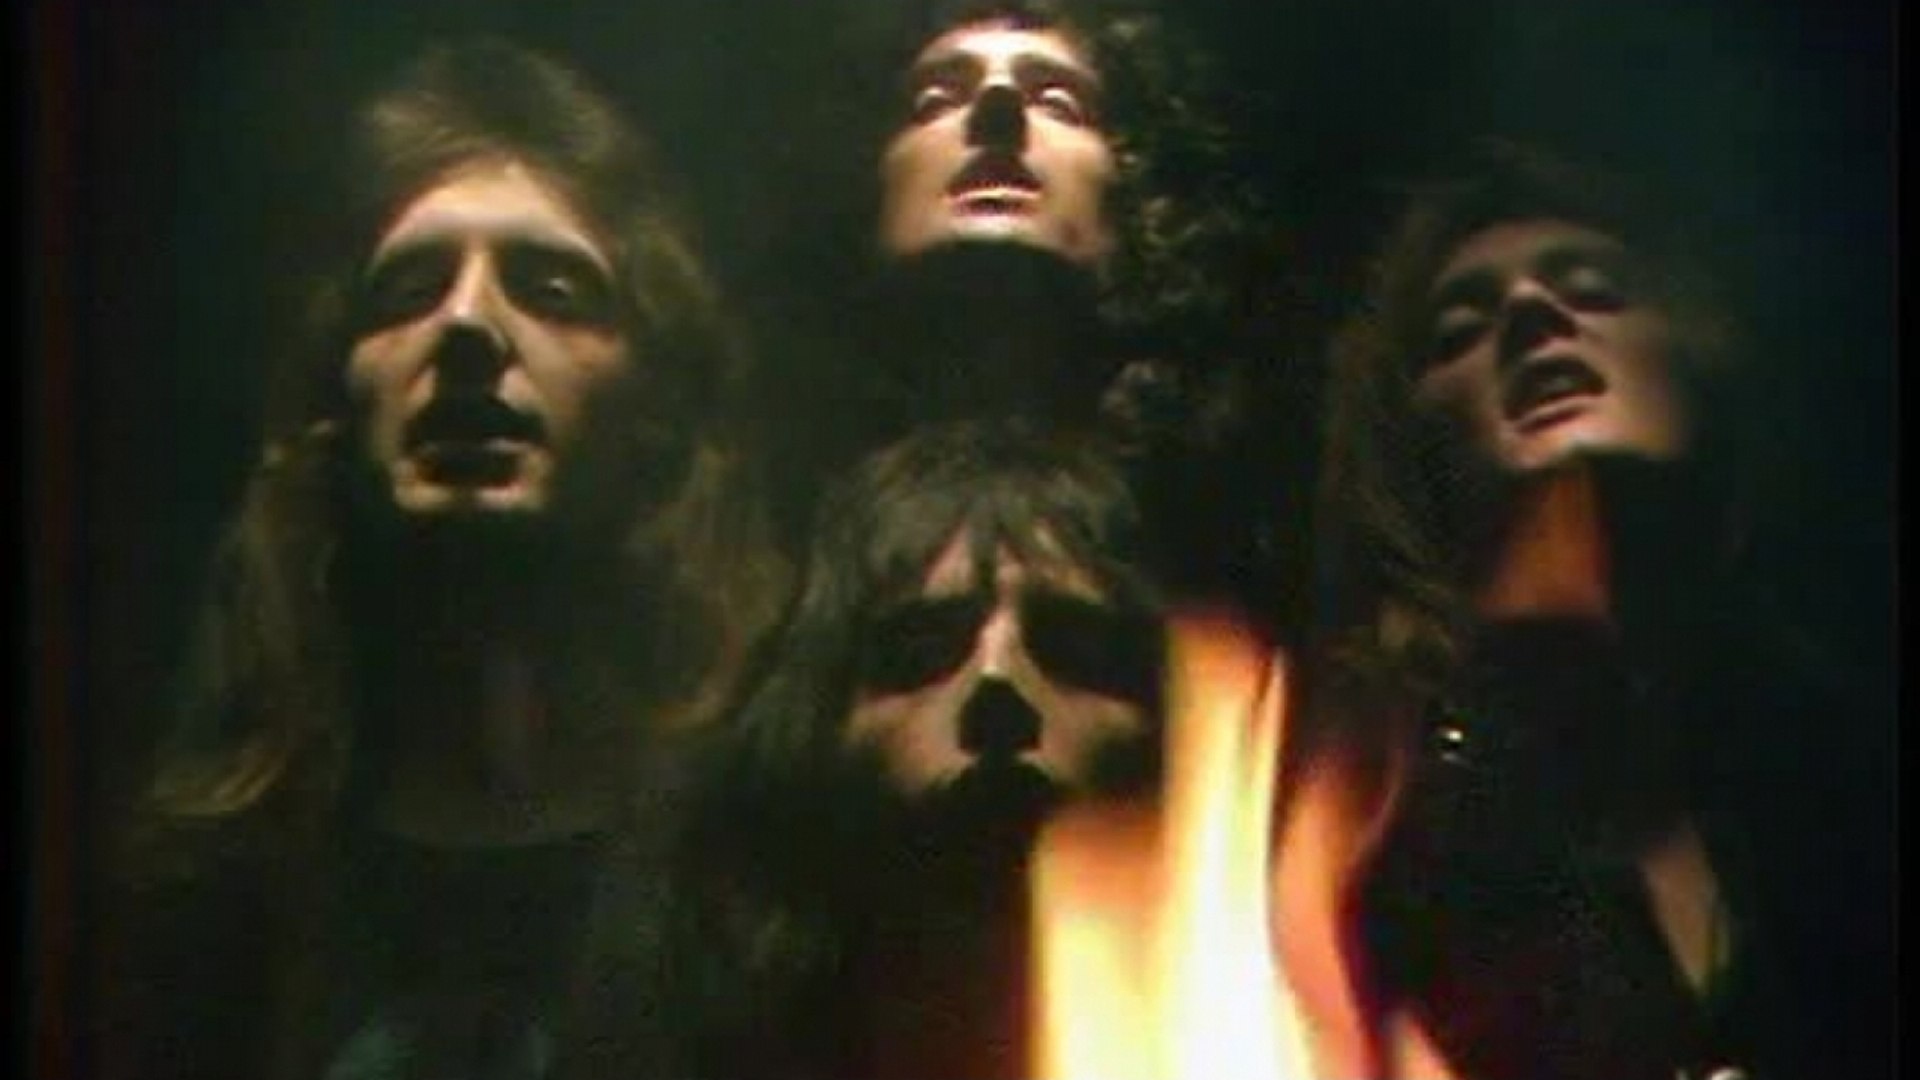 Queen - Bohemian Rhapsody (Official Video) - video Dailymotion